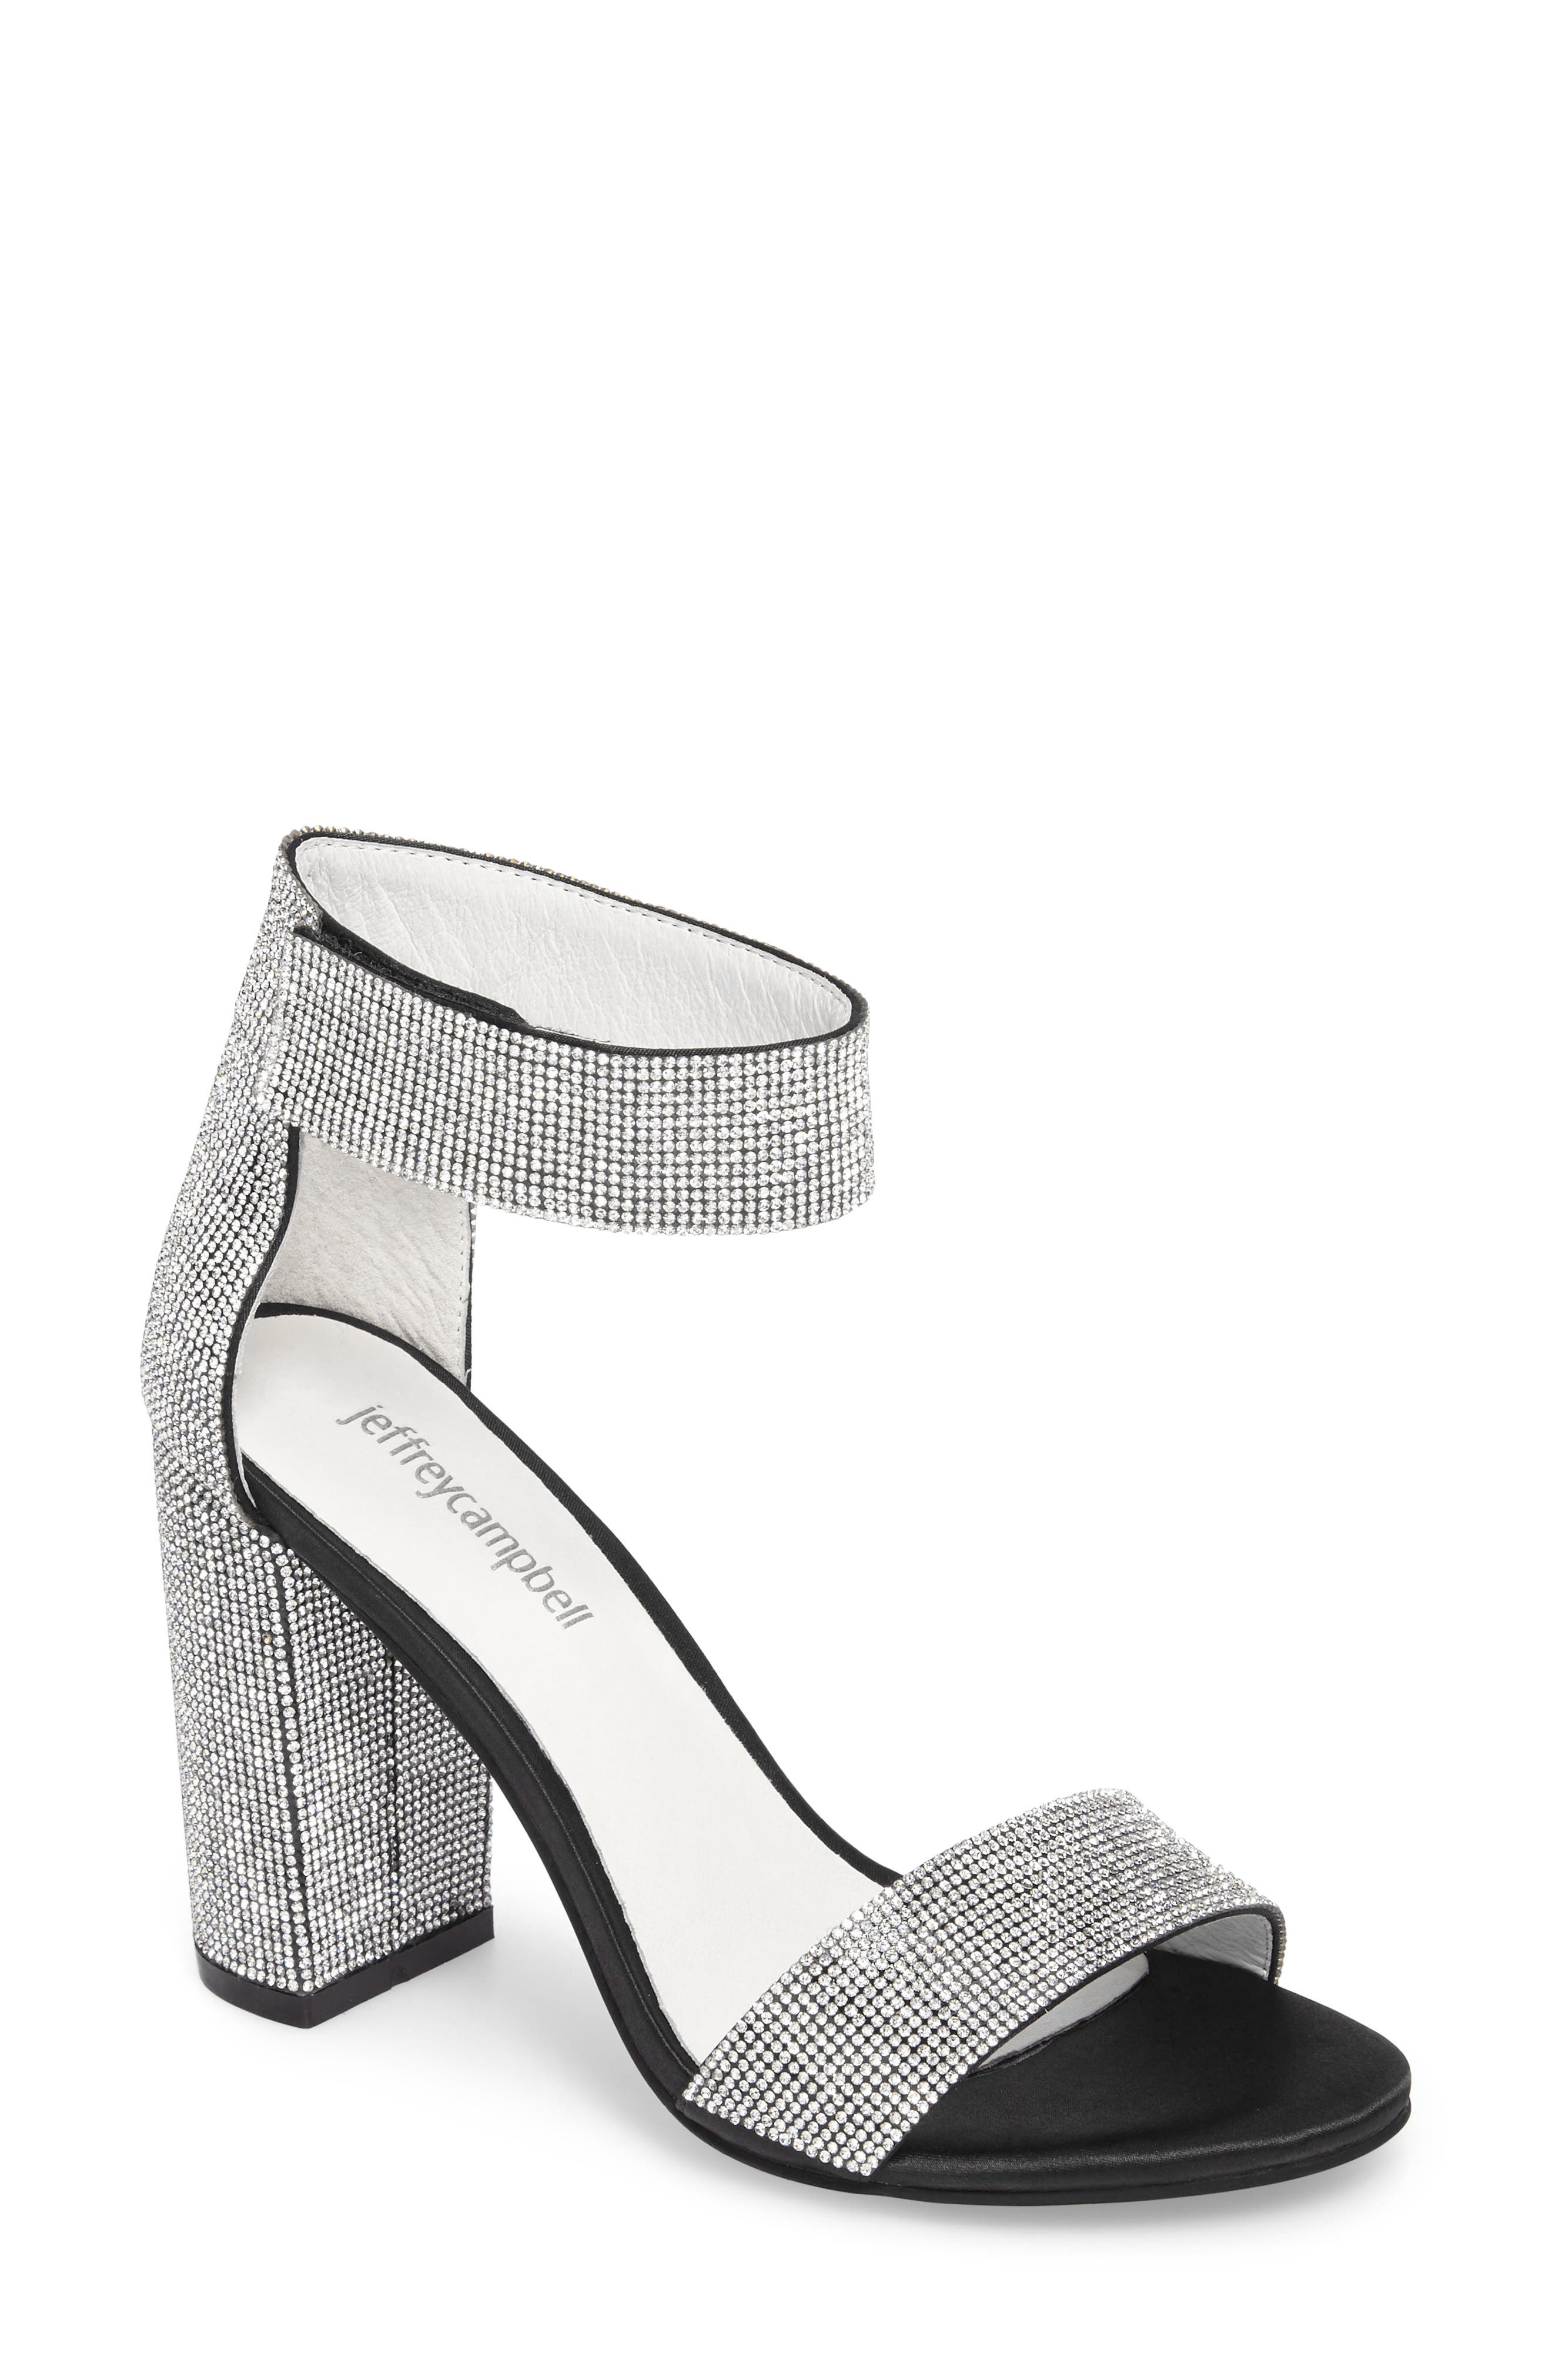 silver box heel shoes